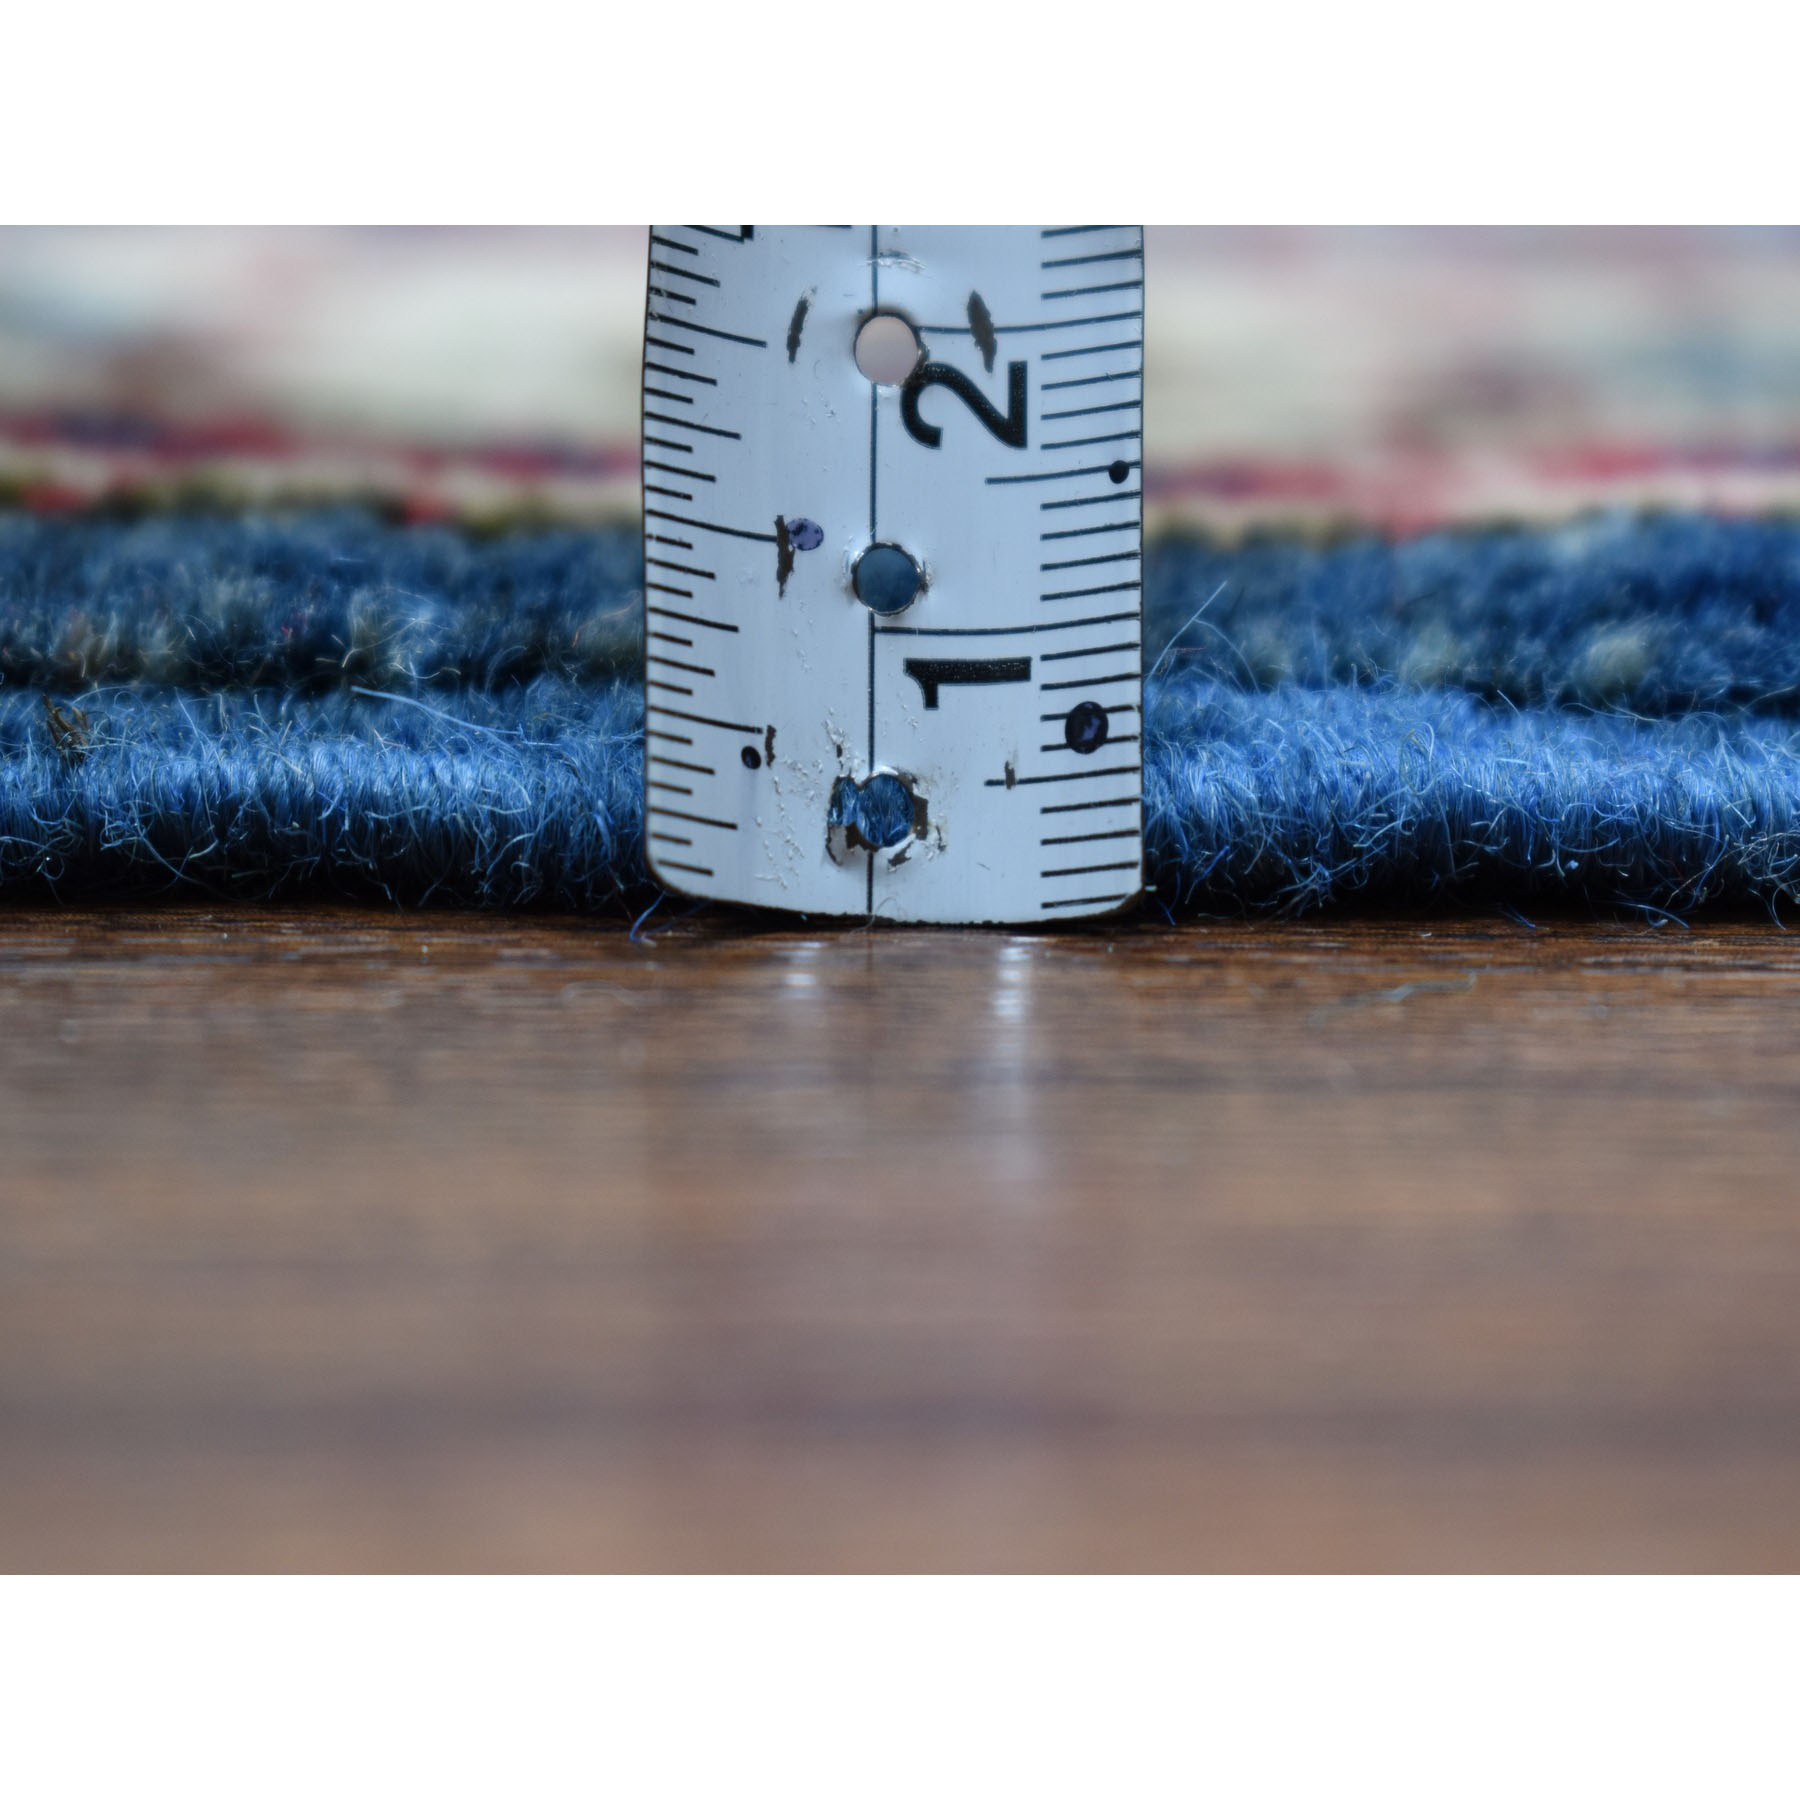 2-x3- Blue Geometric Design Kazak Pure Wool Hand-Knotted Oriental Rug 